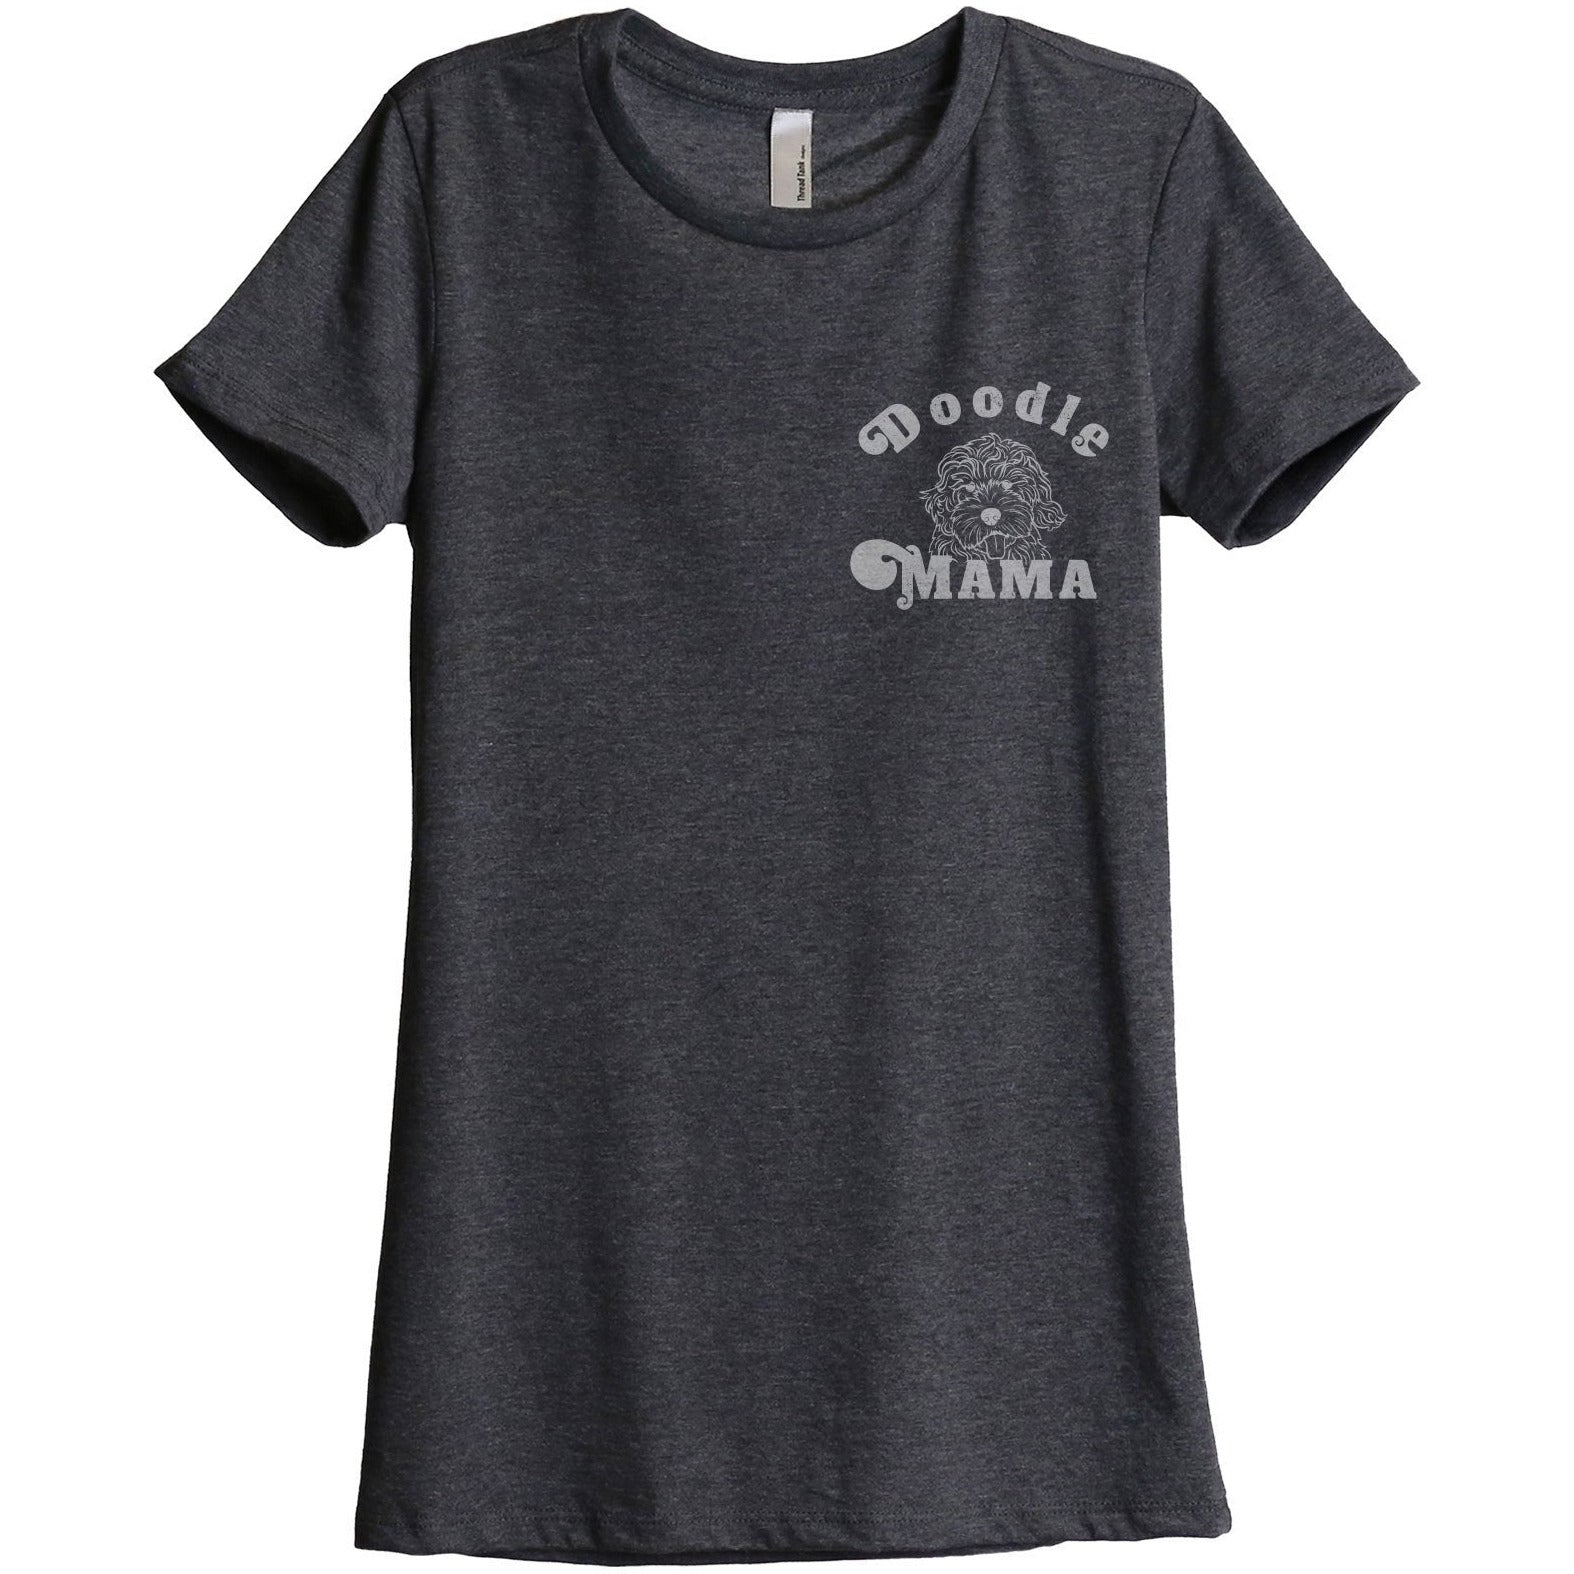 Doodle Mama Women's Relaxed Crewneck T-Shirt Top Tee Charcoal Grey
